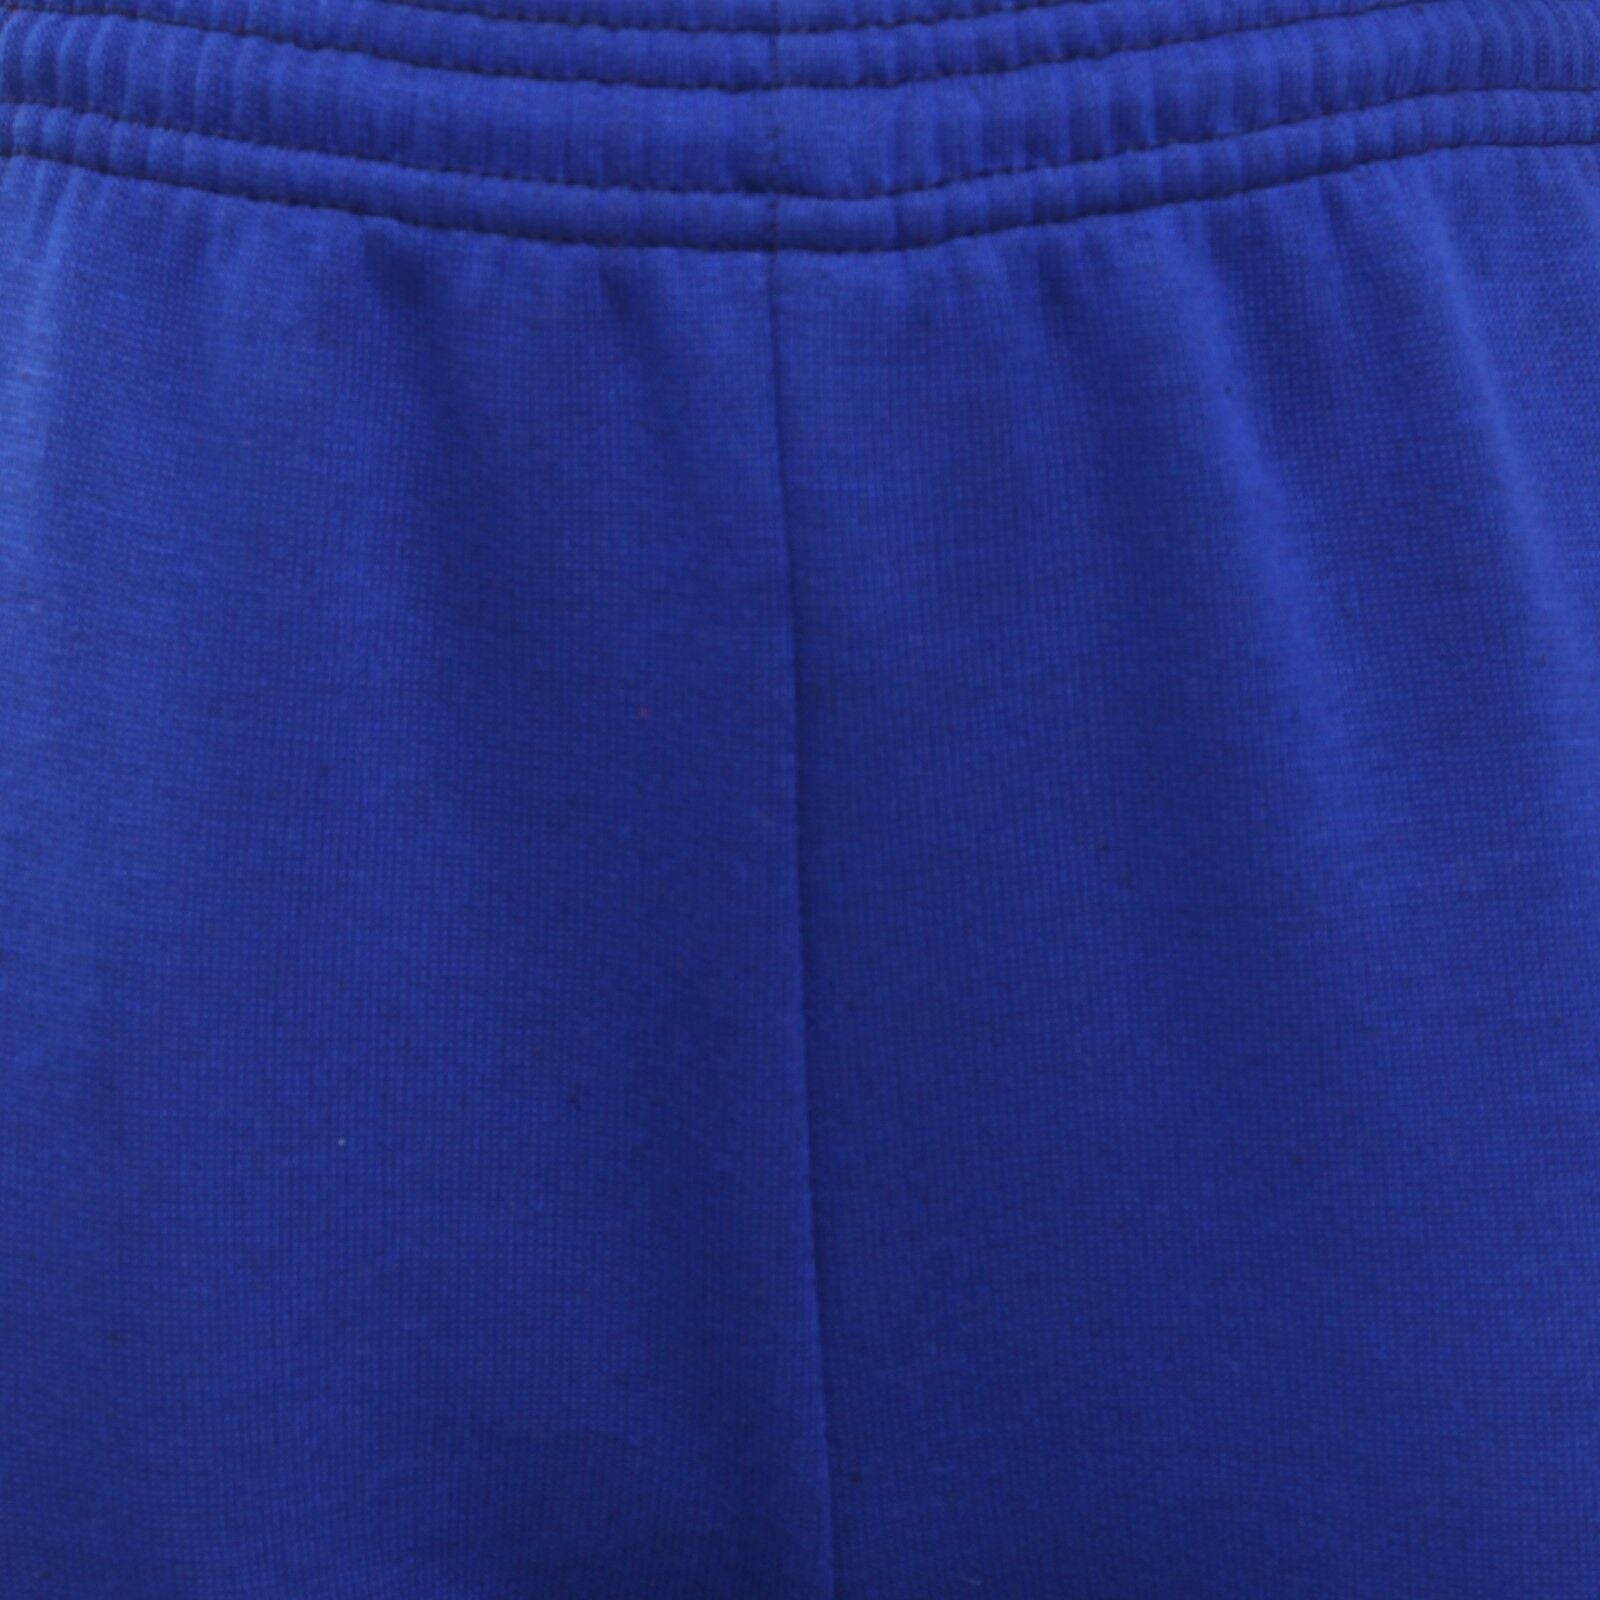 Unisex Boys Girls Fleece PE Gym School Jogging Bottoms Trousers Joggers Pants -Royal Blue